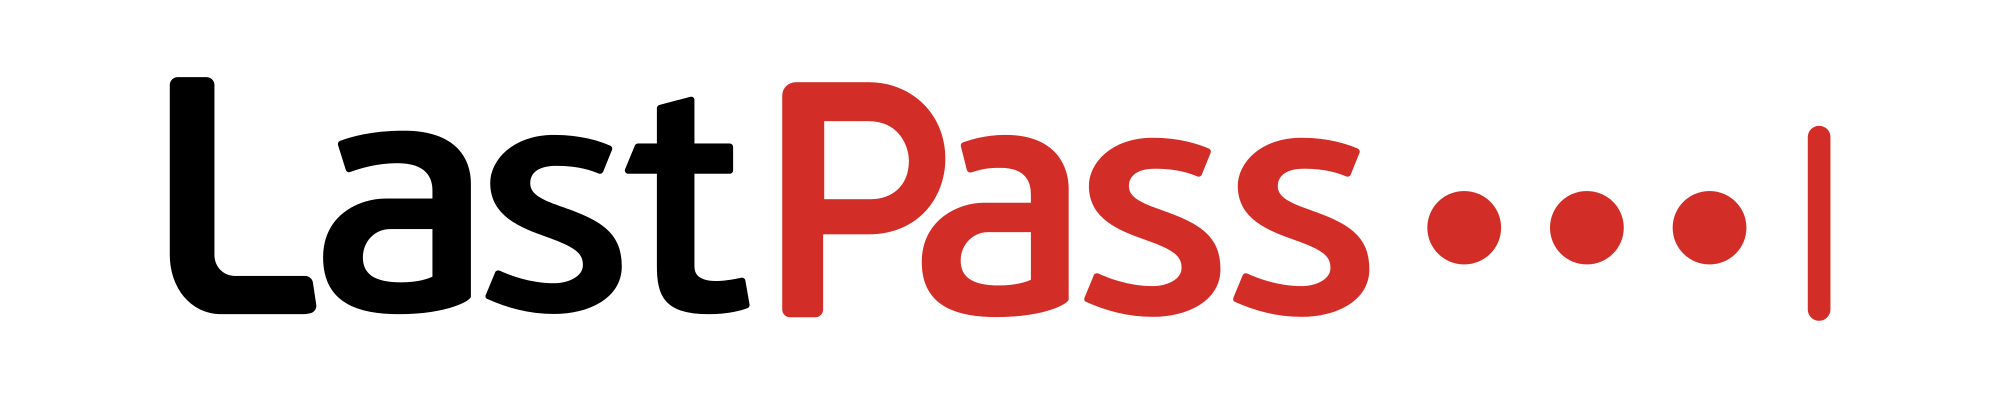 LastPass_logo_2016.svg